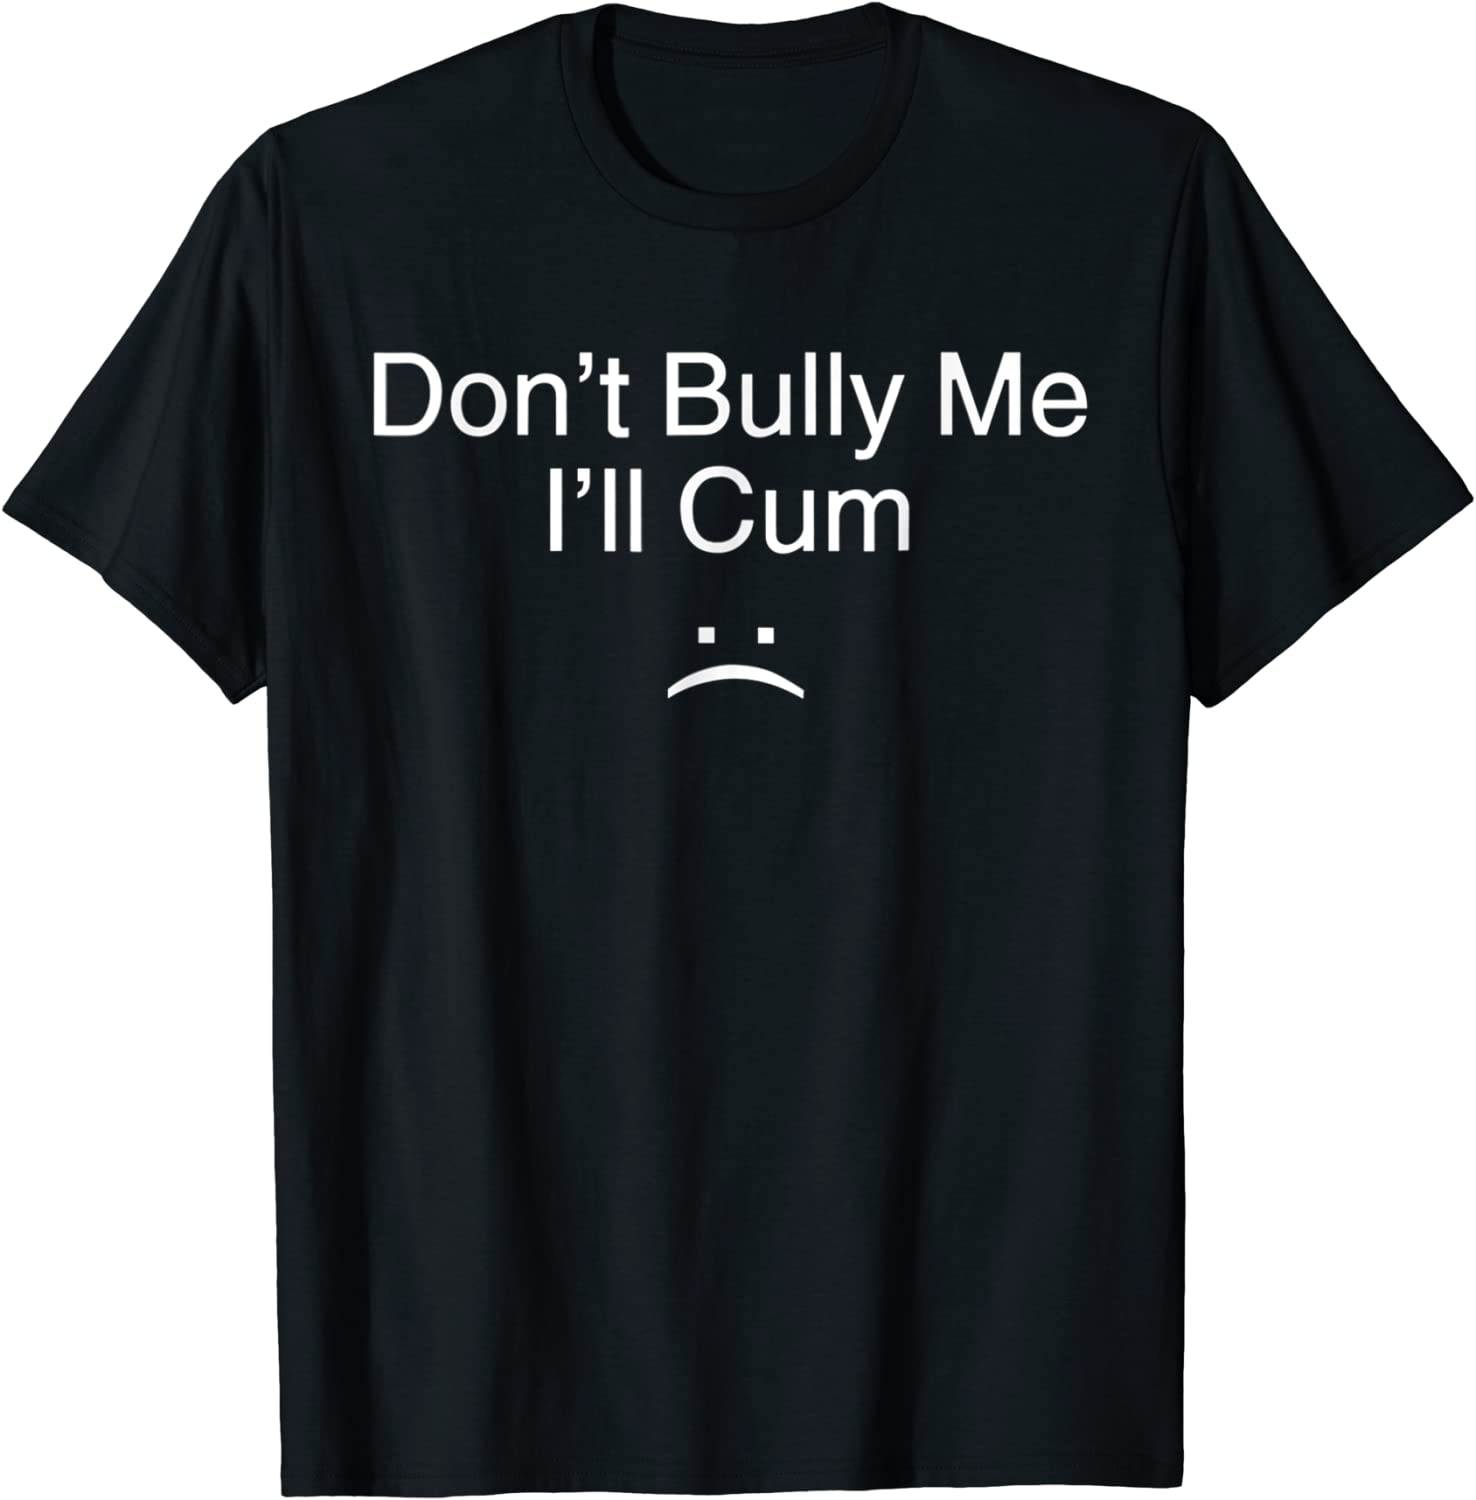 Don't Bully Me I'll Cum (59)